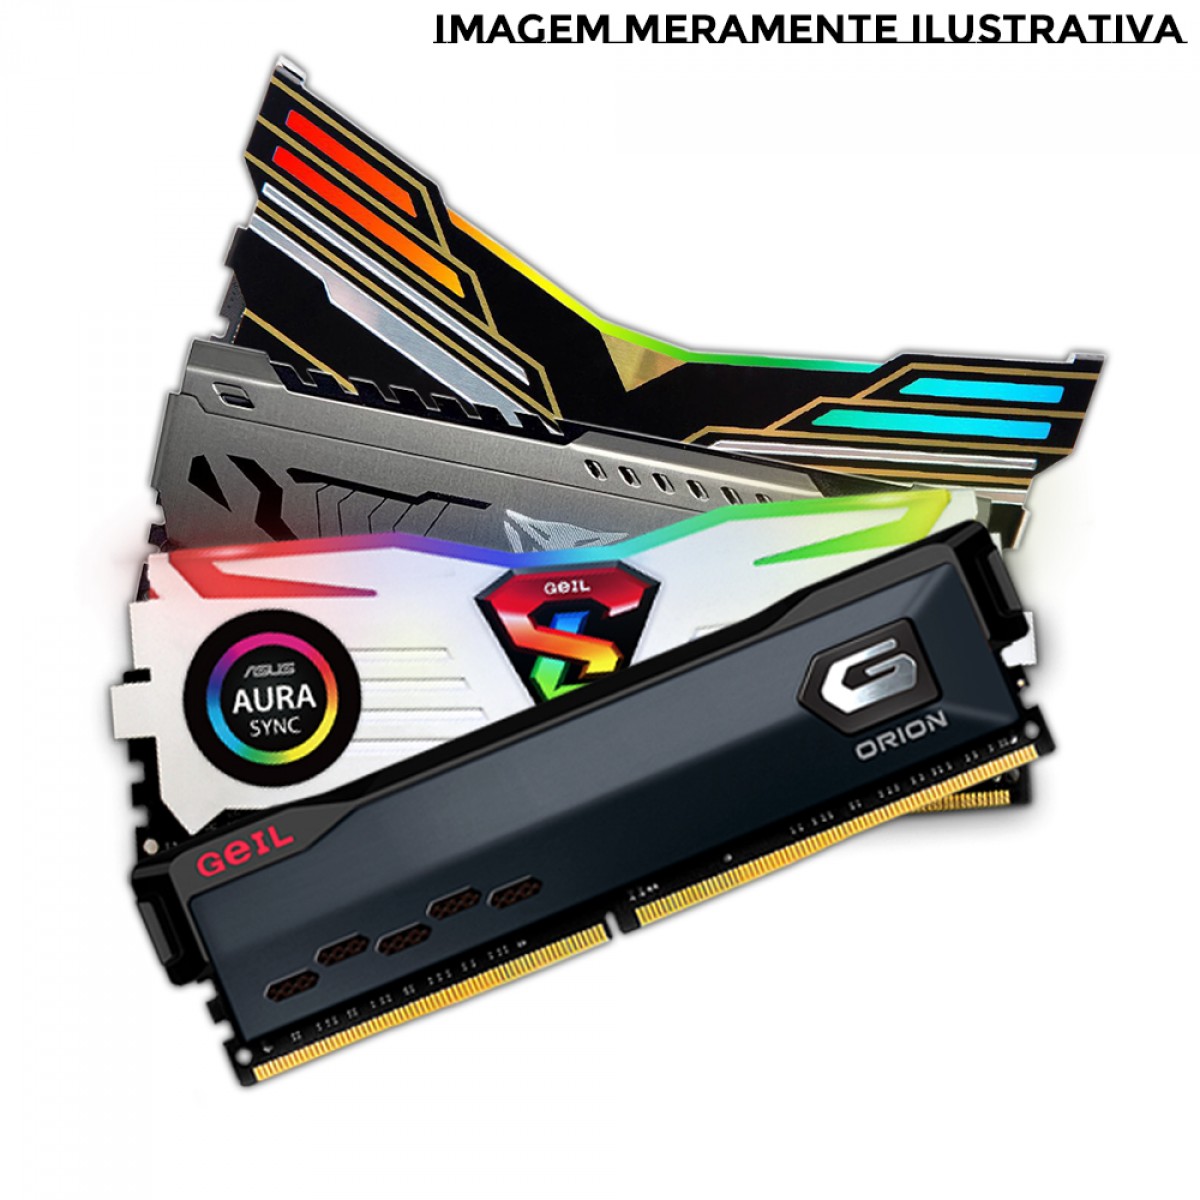  Kit Upgrade, ASUS TUF Gaming X570-PLUS + AMD Ryzen 5 5600G + Memória DDR4, 8GB/3000MHz